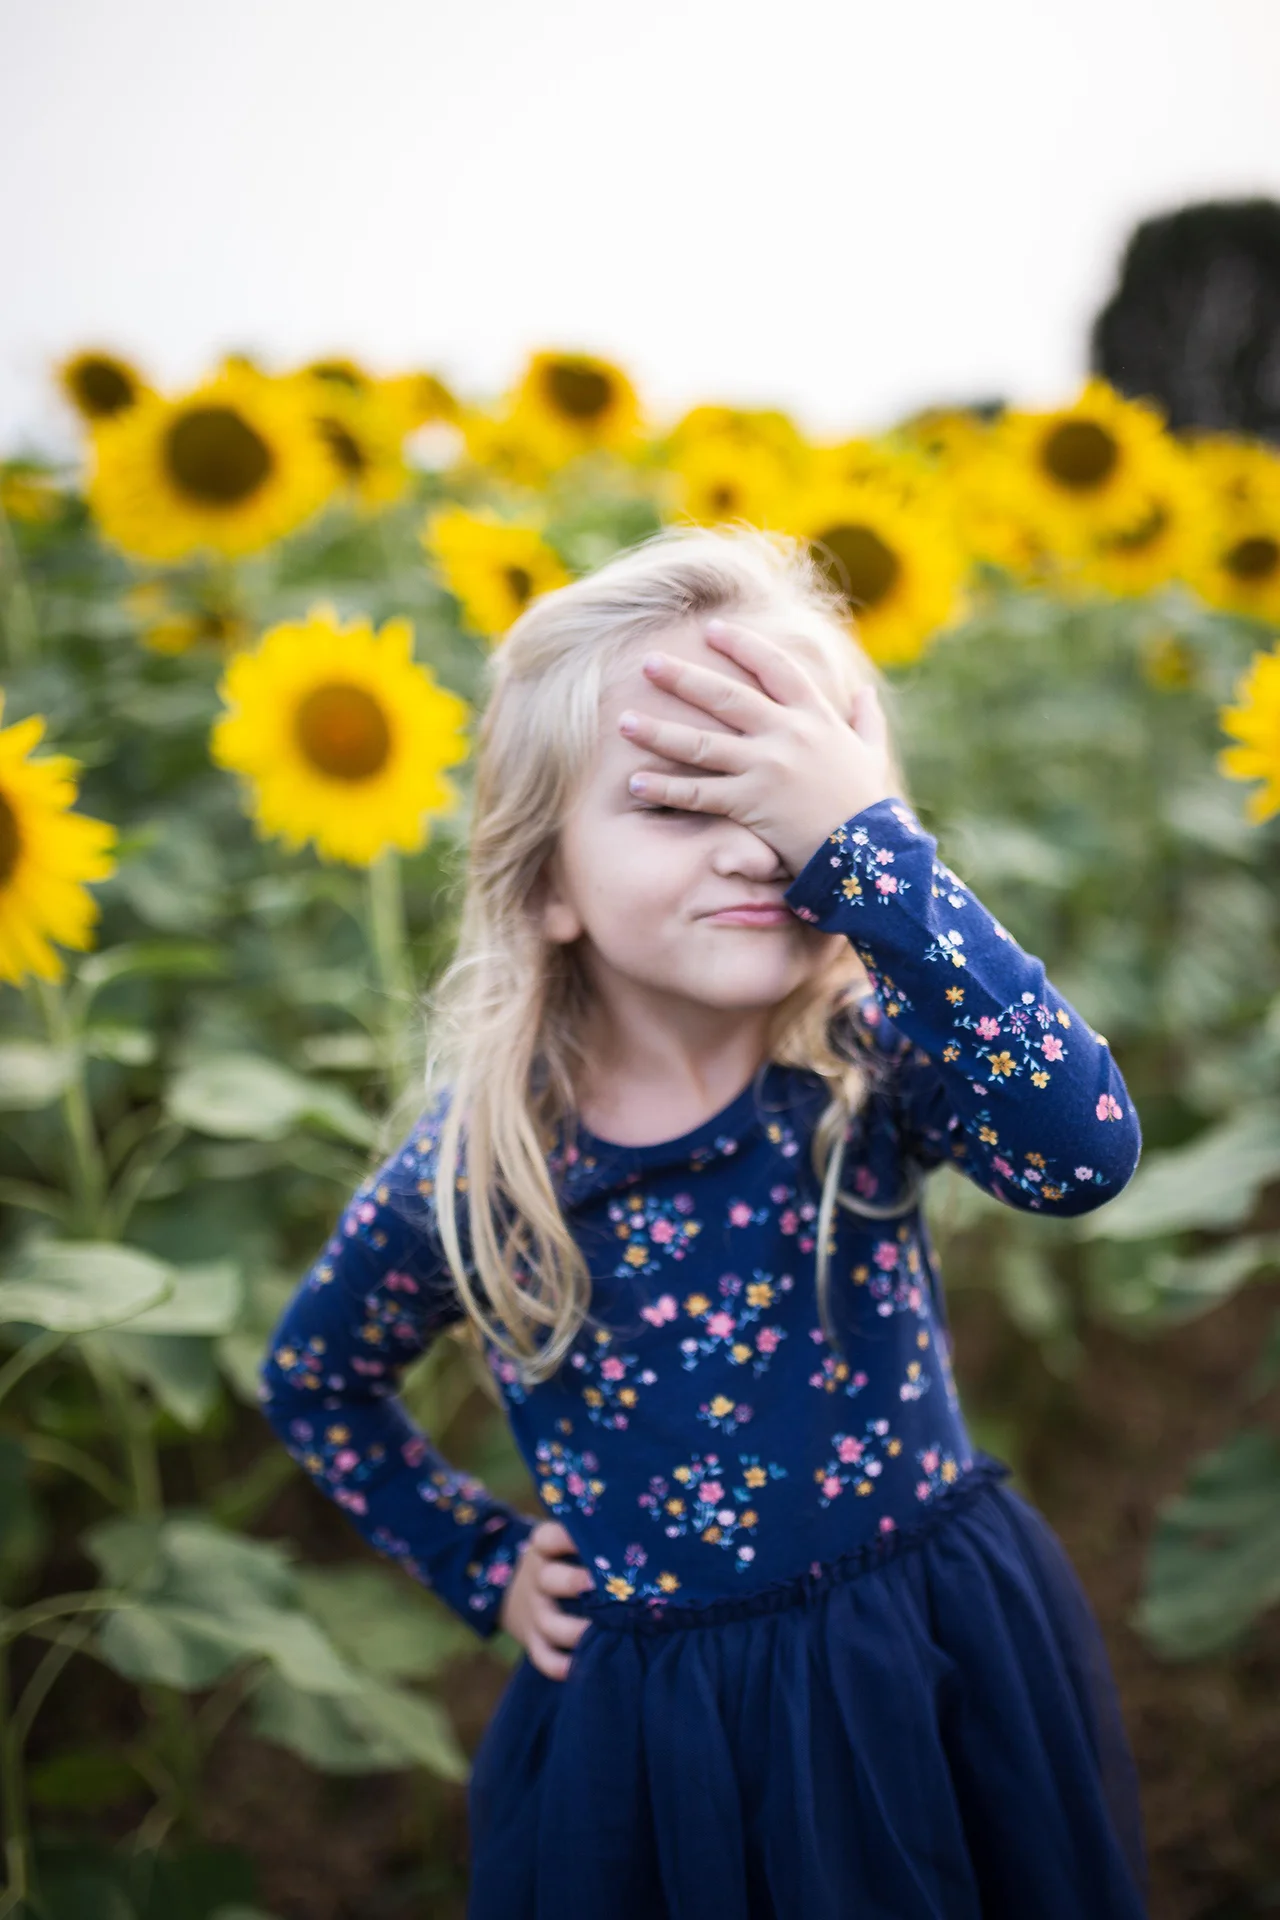 Little girl with sunflower